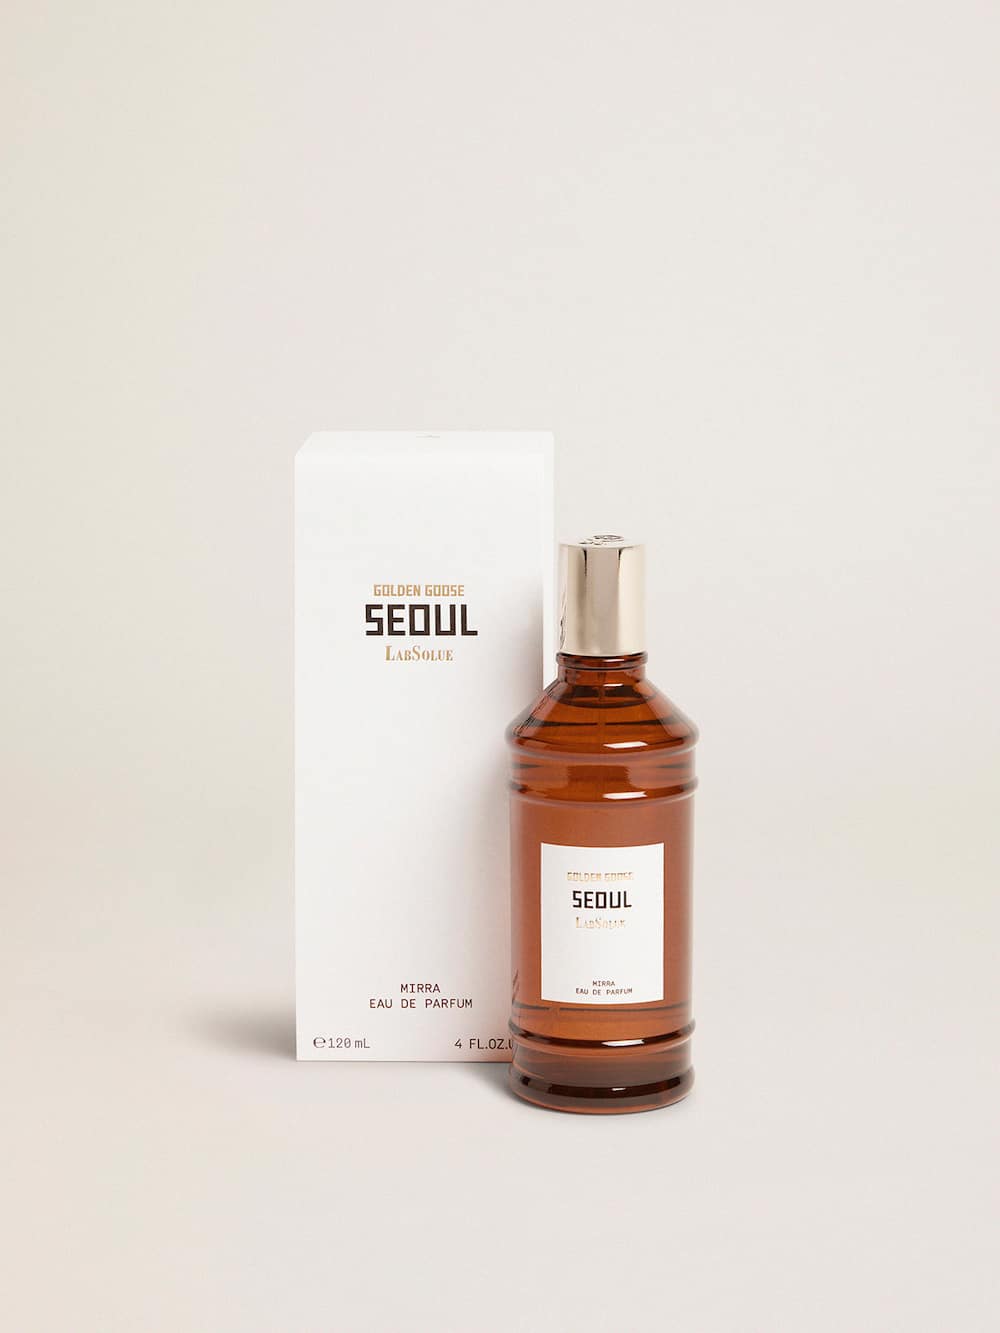 Golden Goose - Seoul Essence Myrrh Eau de Parfum 120 ml in 